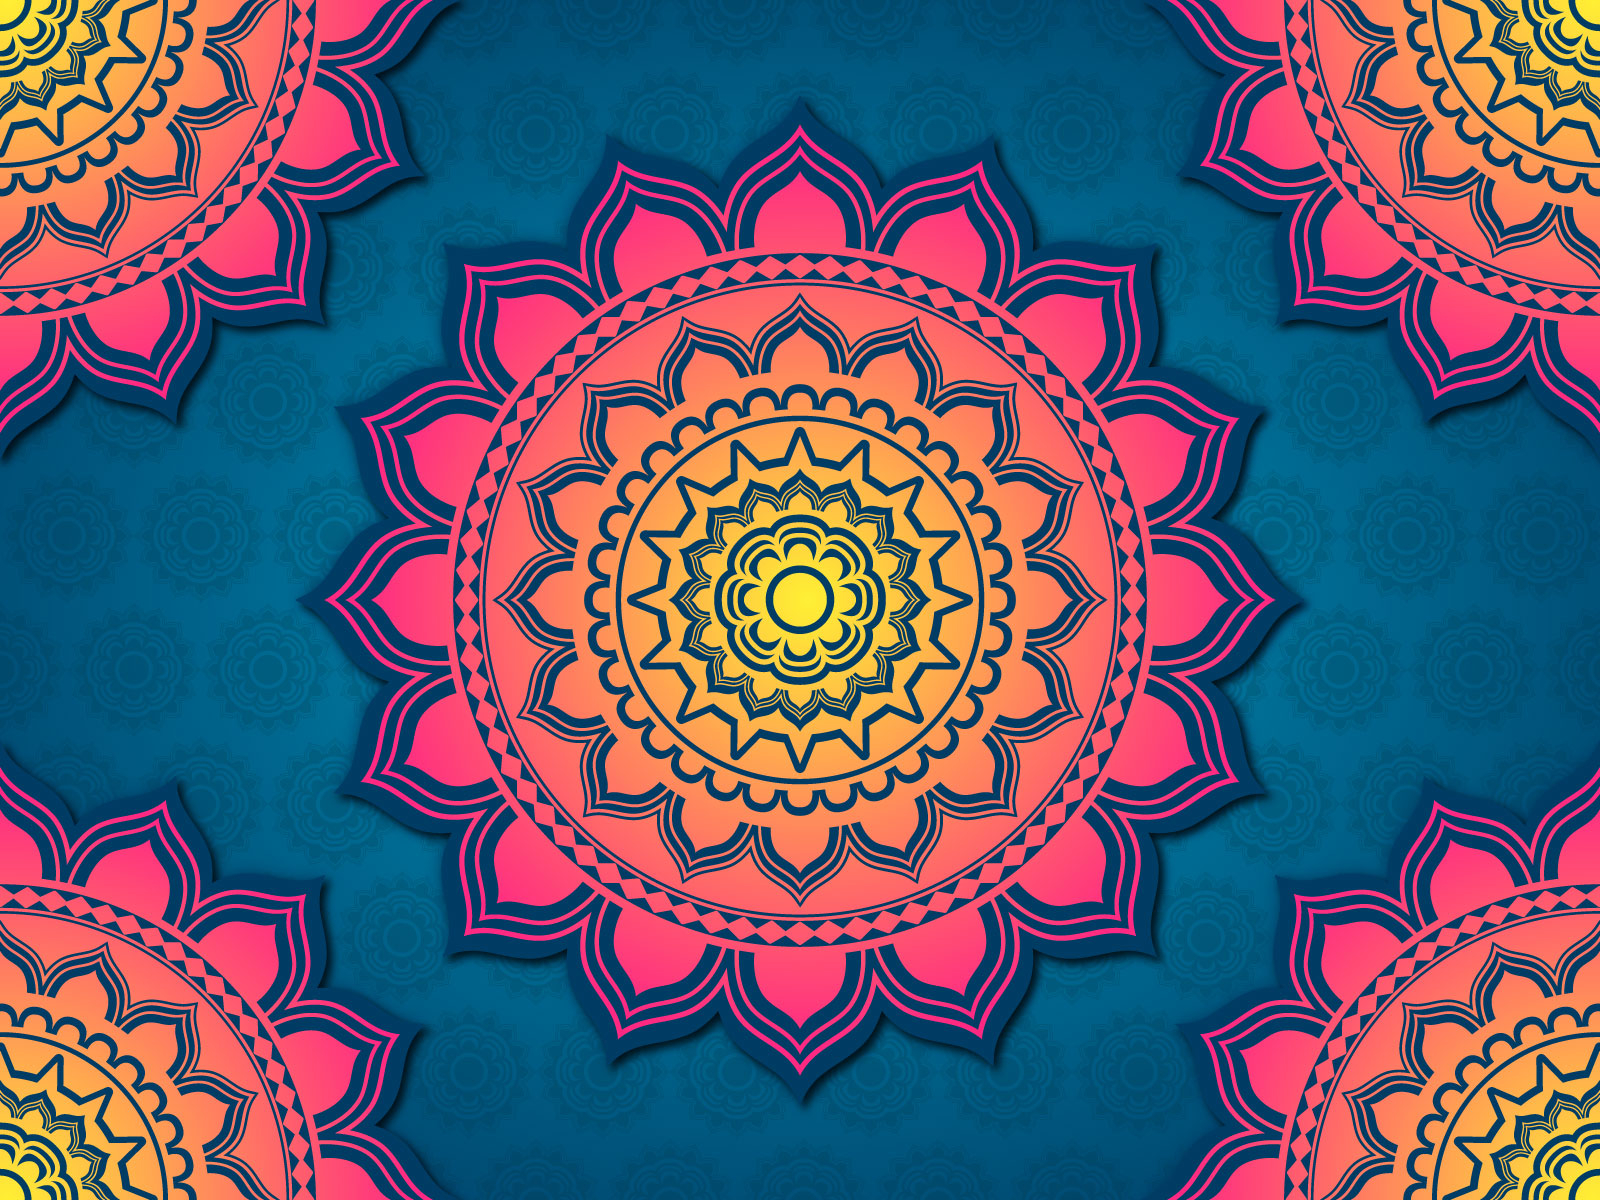 Mandala Art Designs Colourful Easy - Germowp